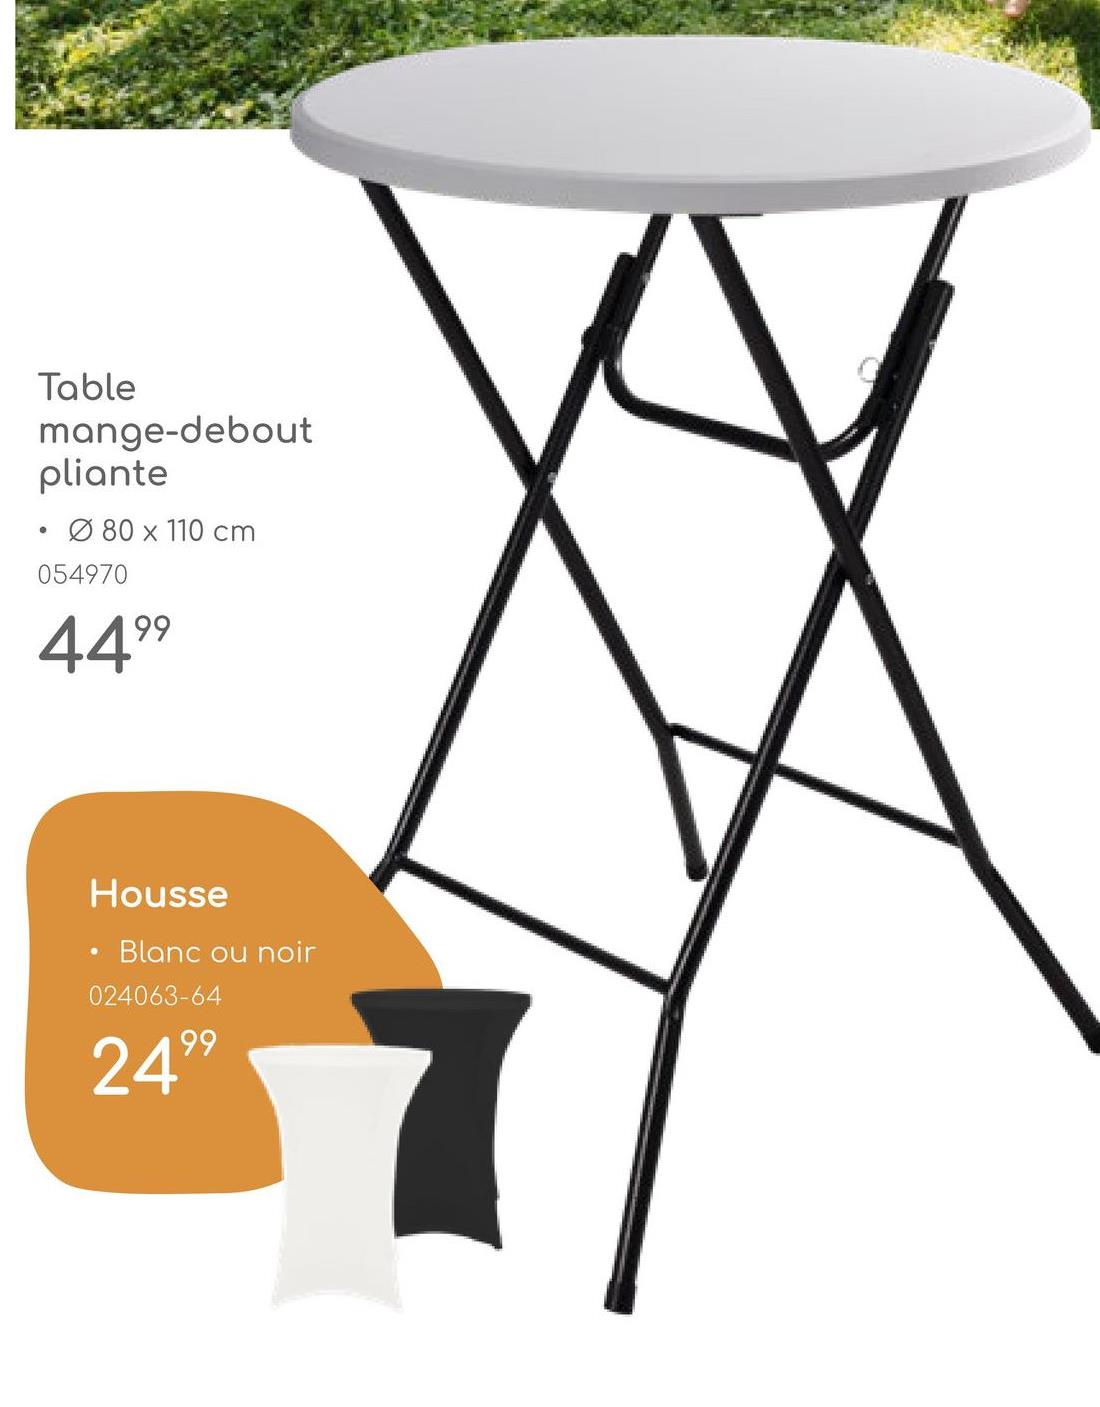 Table
mange-debout
pliante
• Ø 80 x 110 cm
054970
4499
Housse
•
Blanc ou noir
024063-64
2499